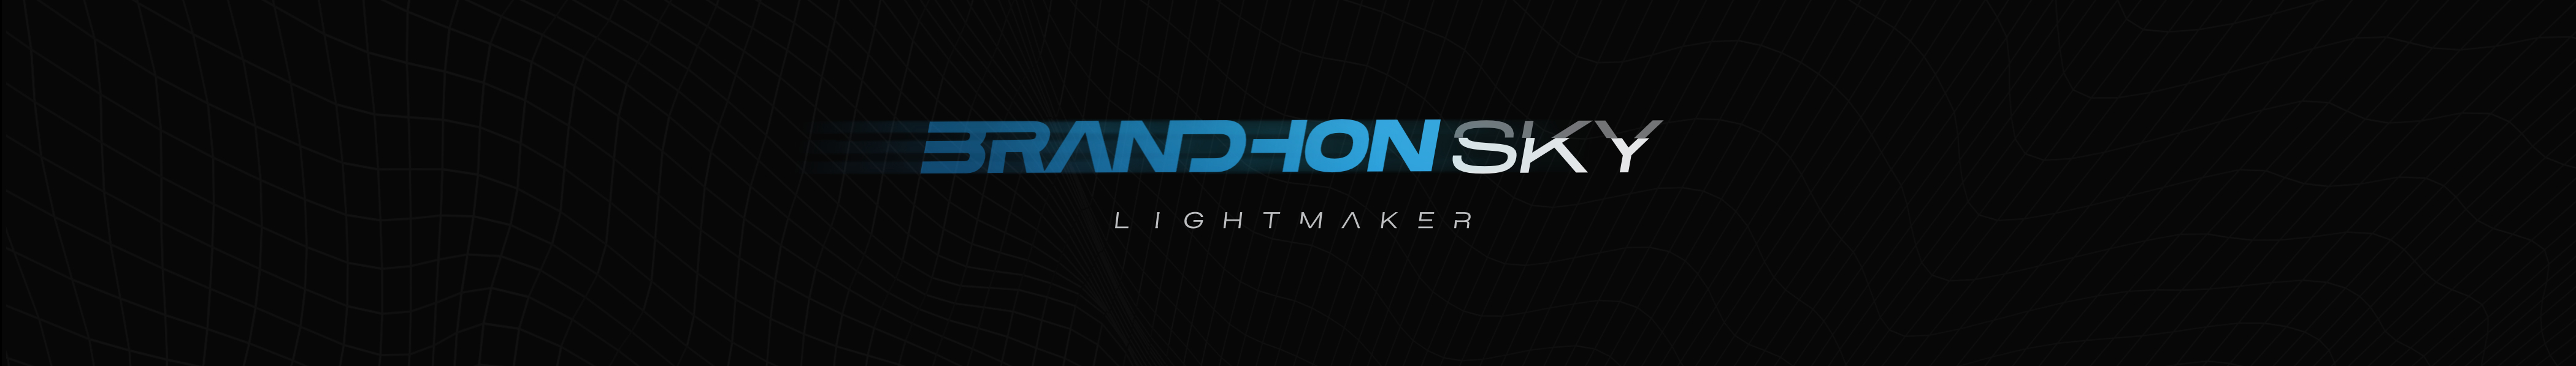 BRANDHON SKY's profile banner